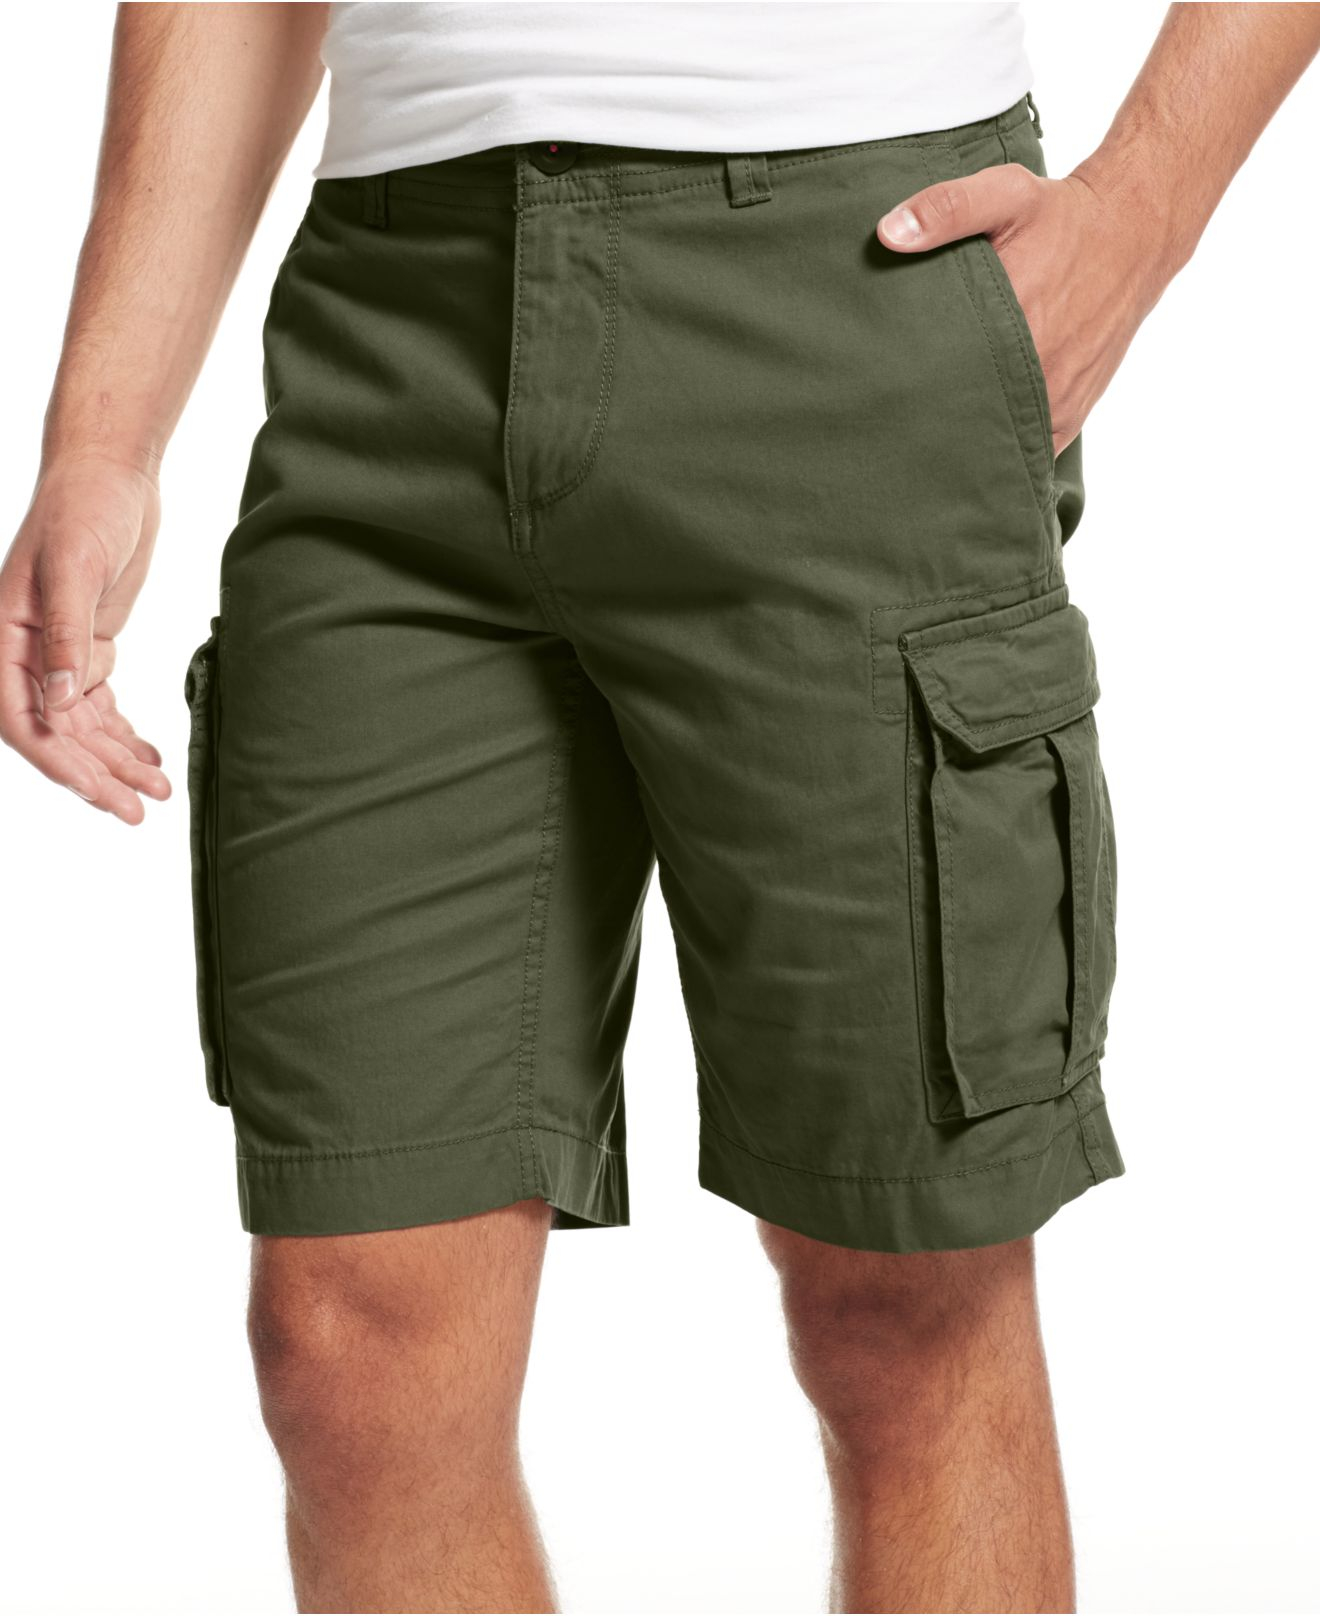 tommy hilfiger cargo shorts mens cheap 